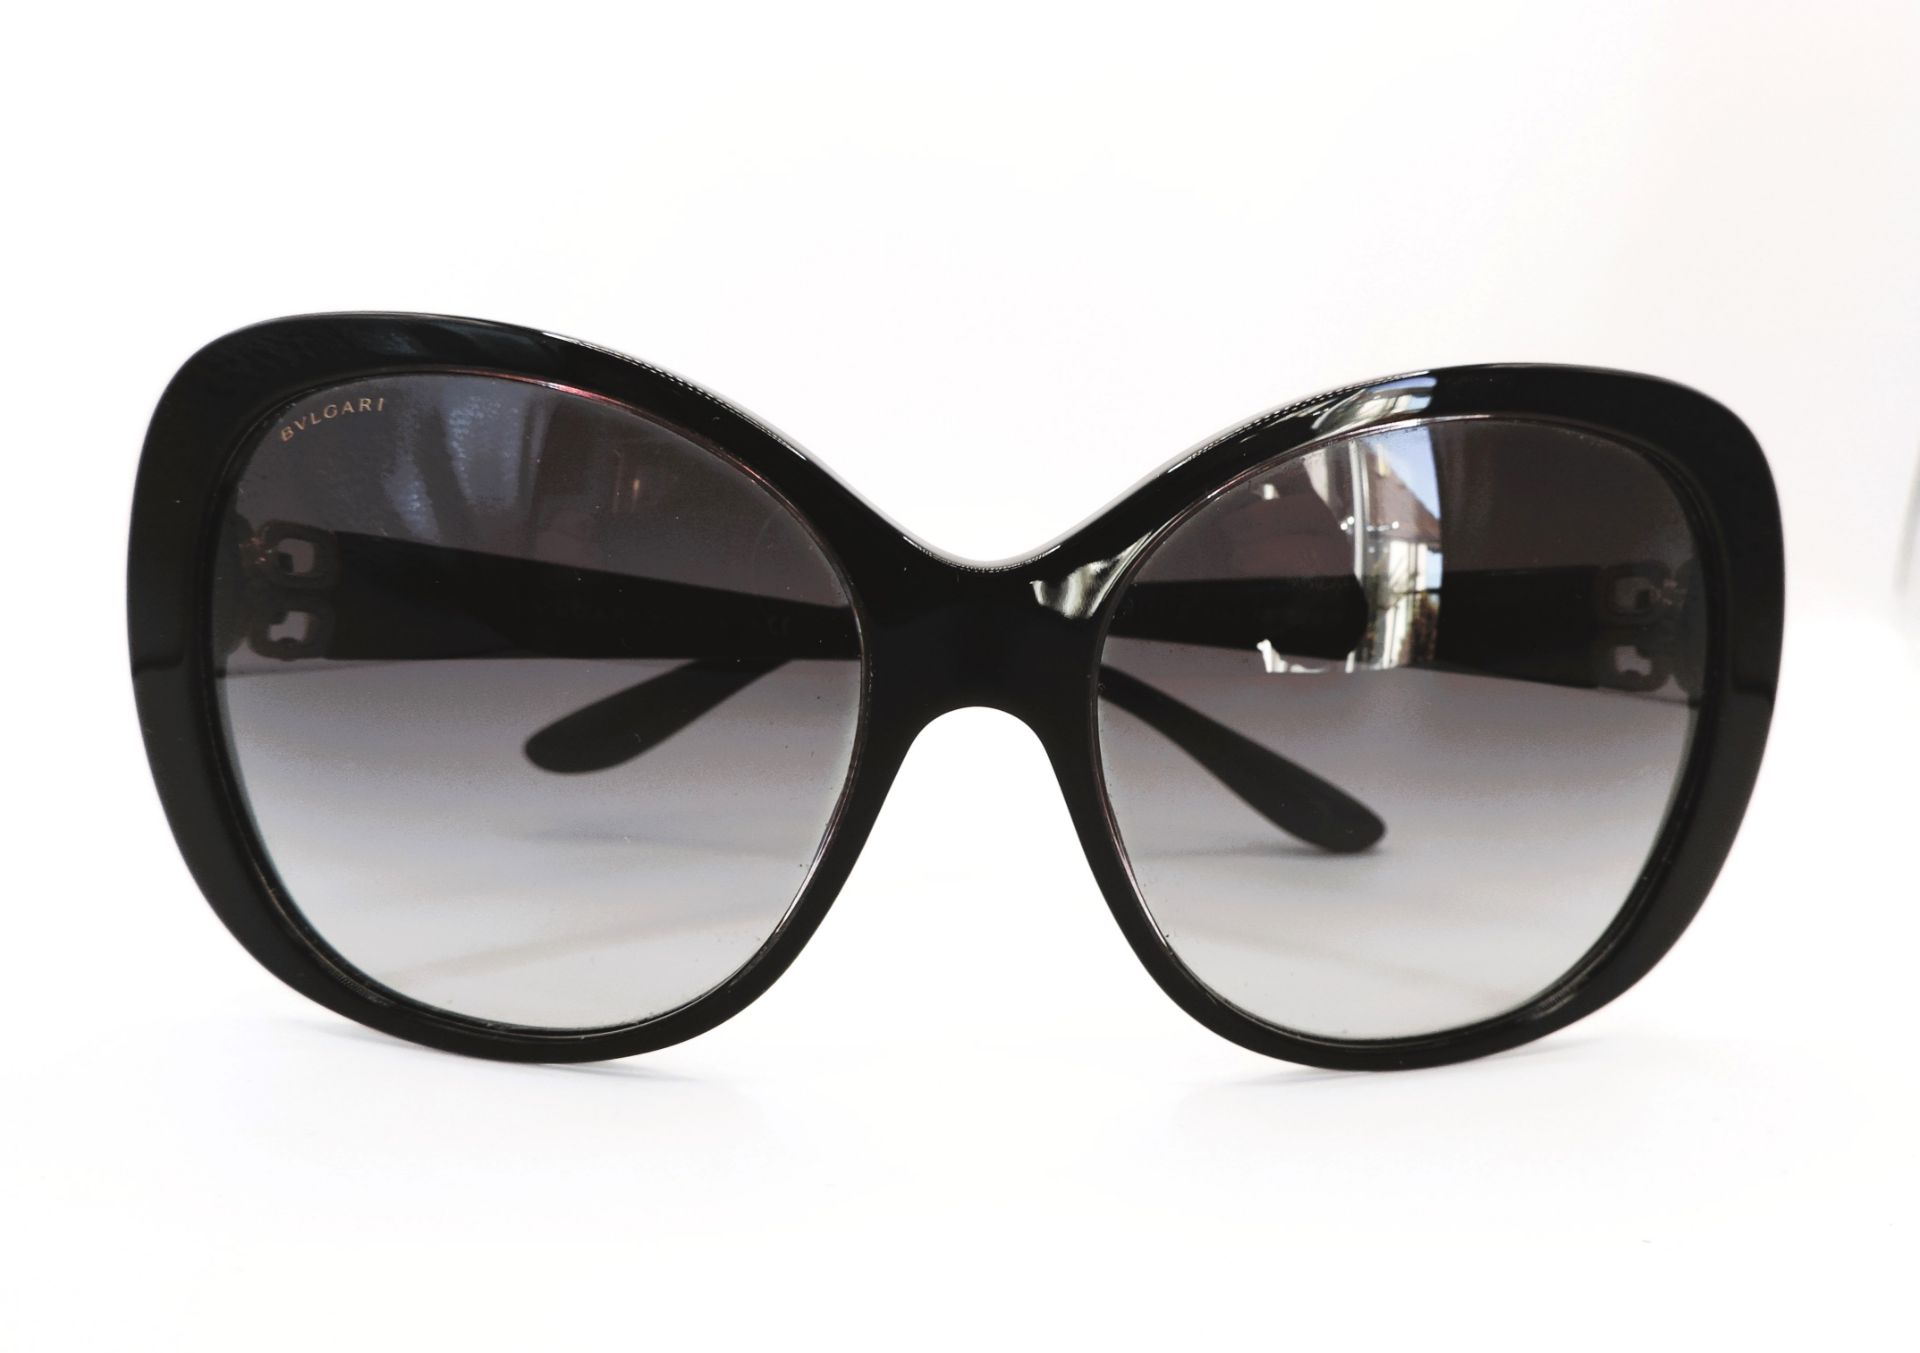 BVLGARI Black Sunglasses 8171-C Jewelled Hinged Detail New With Box & Certificate - Image 2 of 17